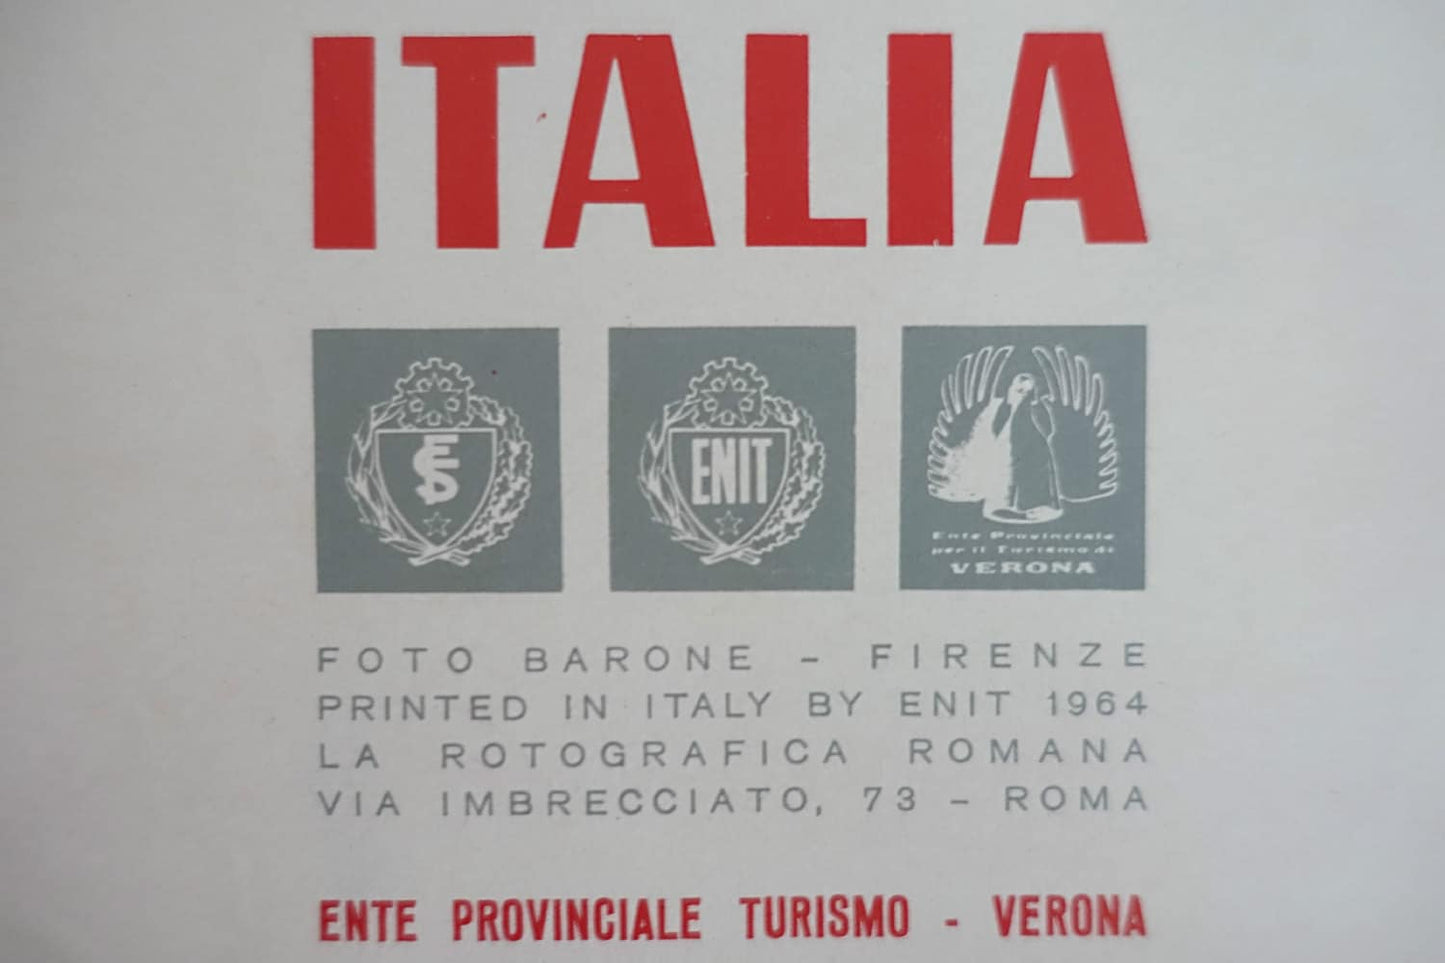 1964 Verona Travel Poster - Original Vintage Poster